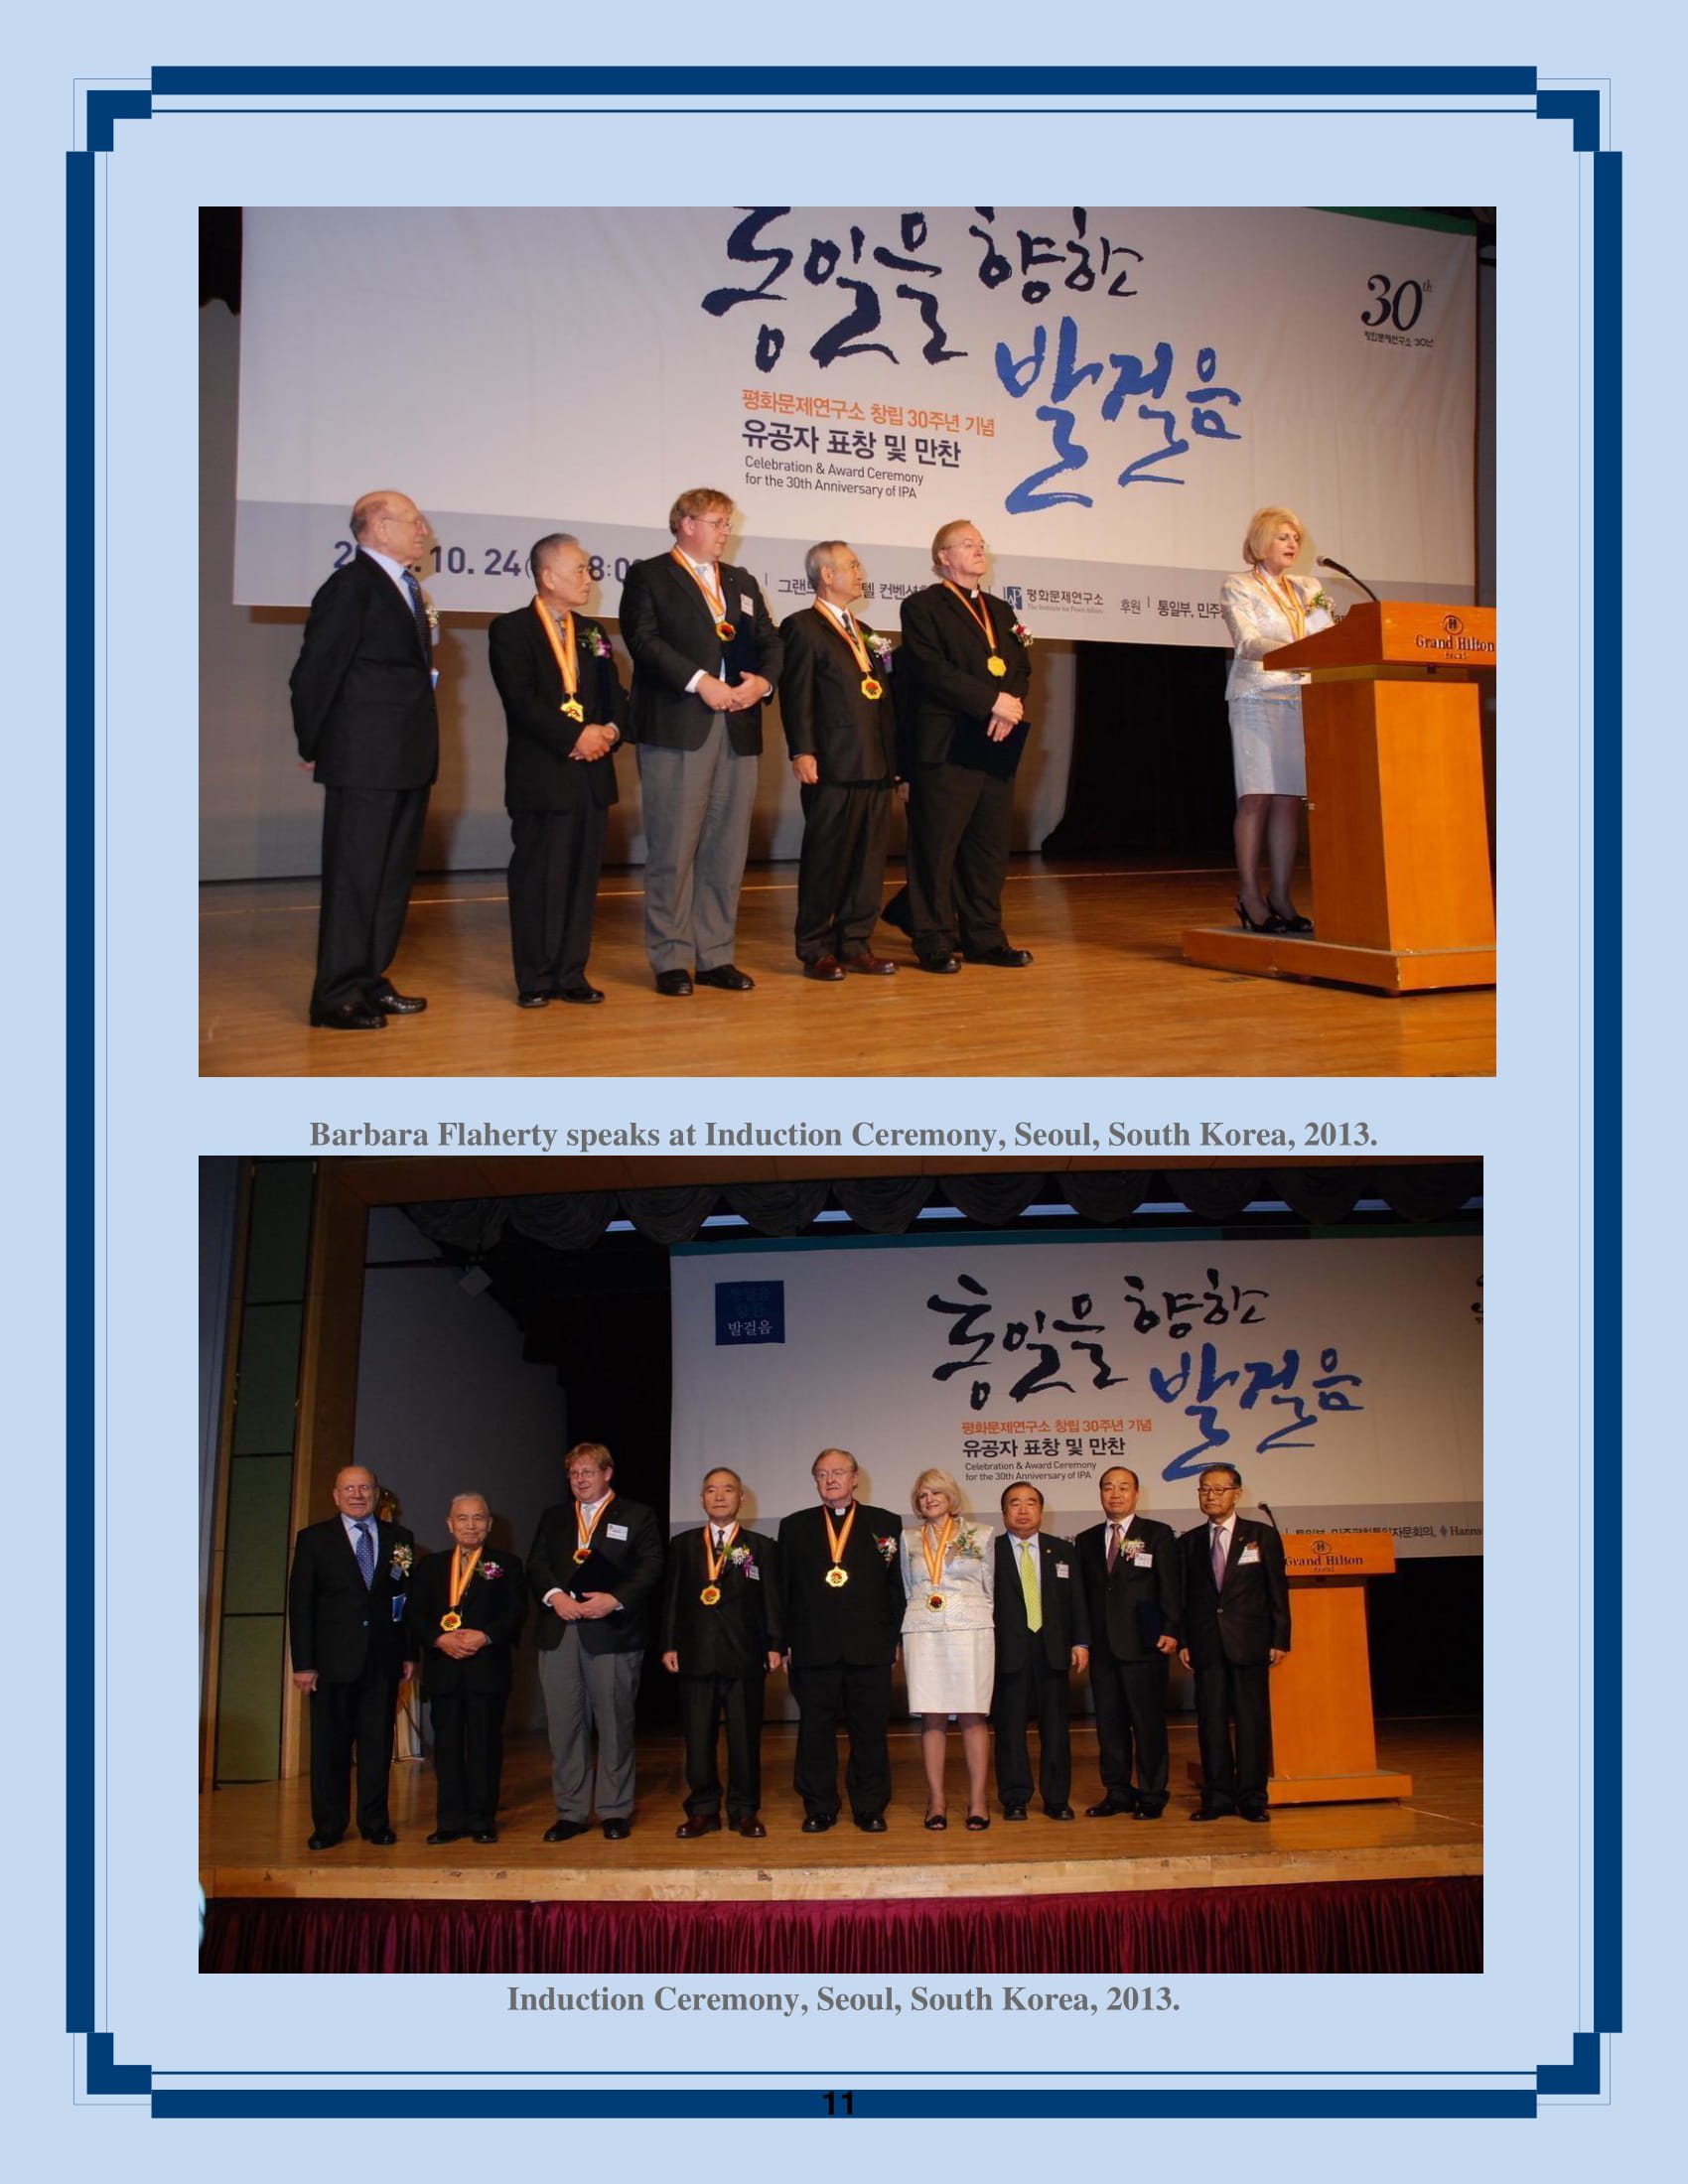 Barbara Flaherty speaks at Induction Ceremony, Seoul, South Korea